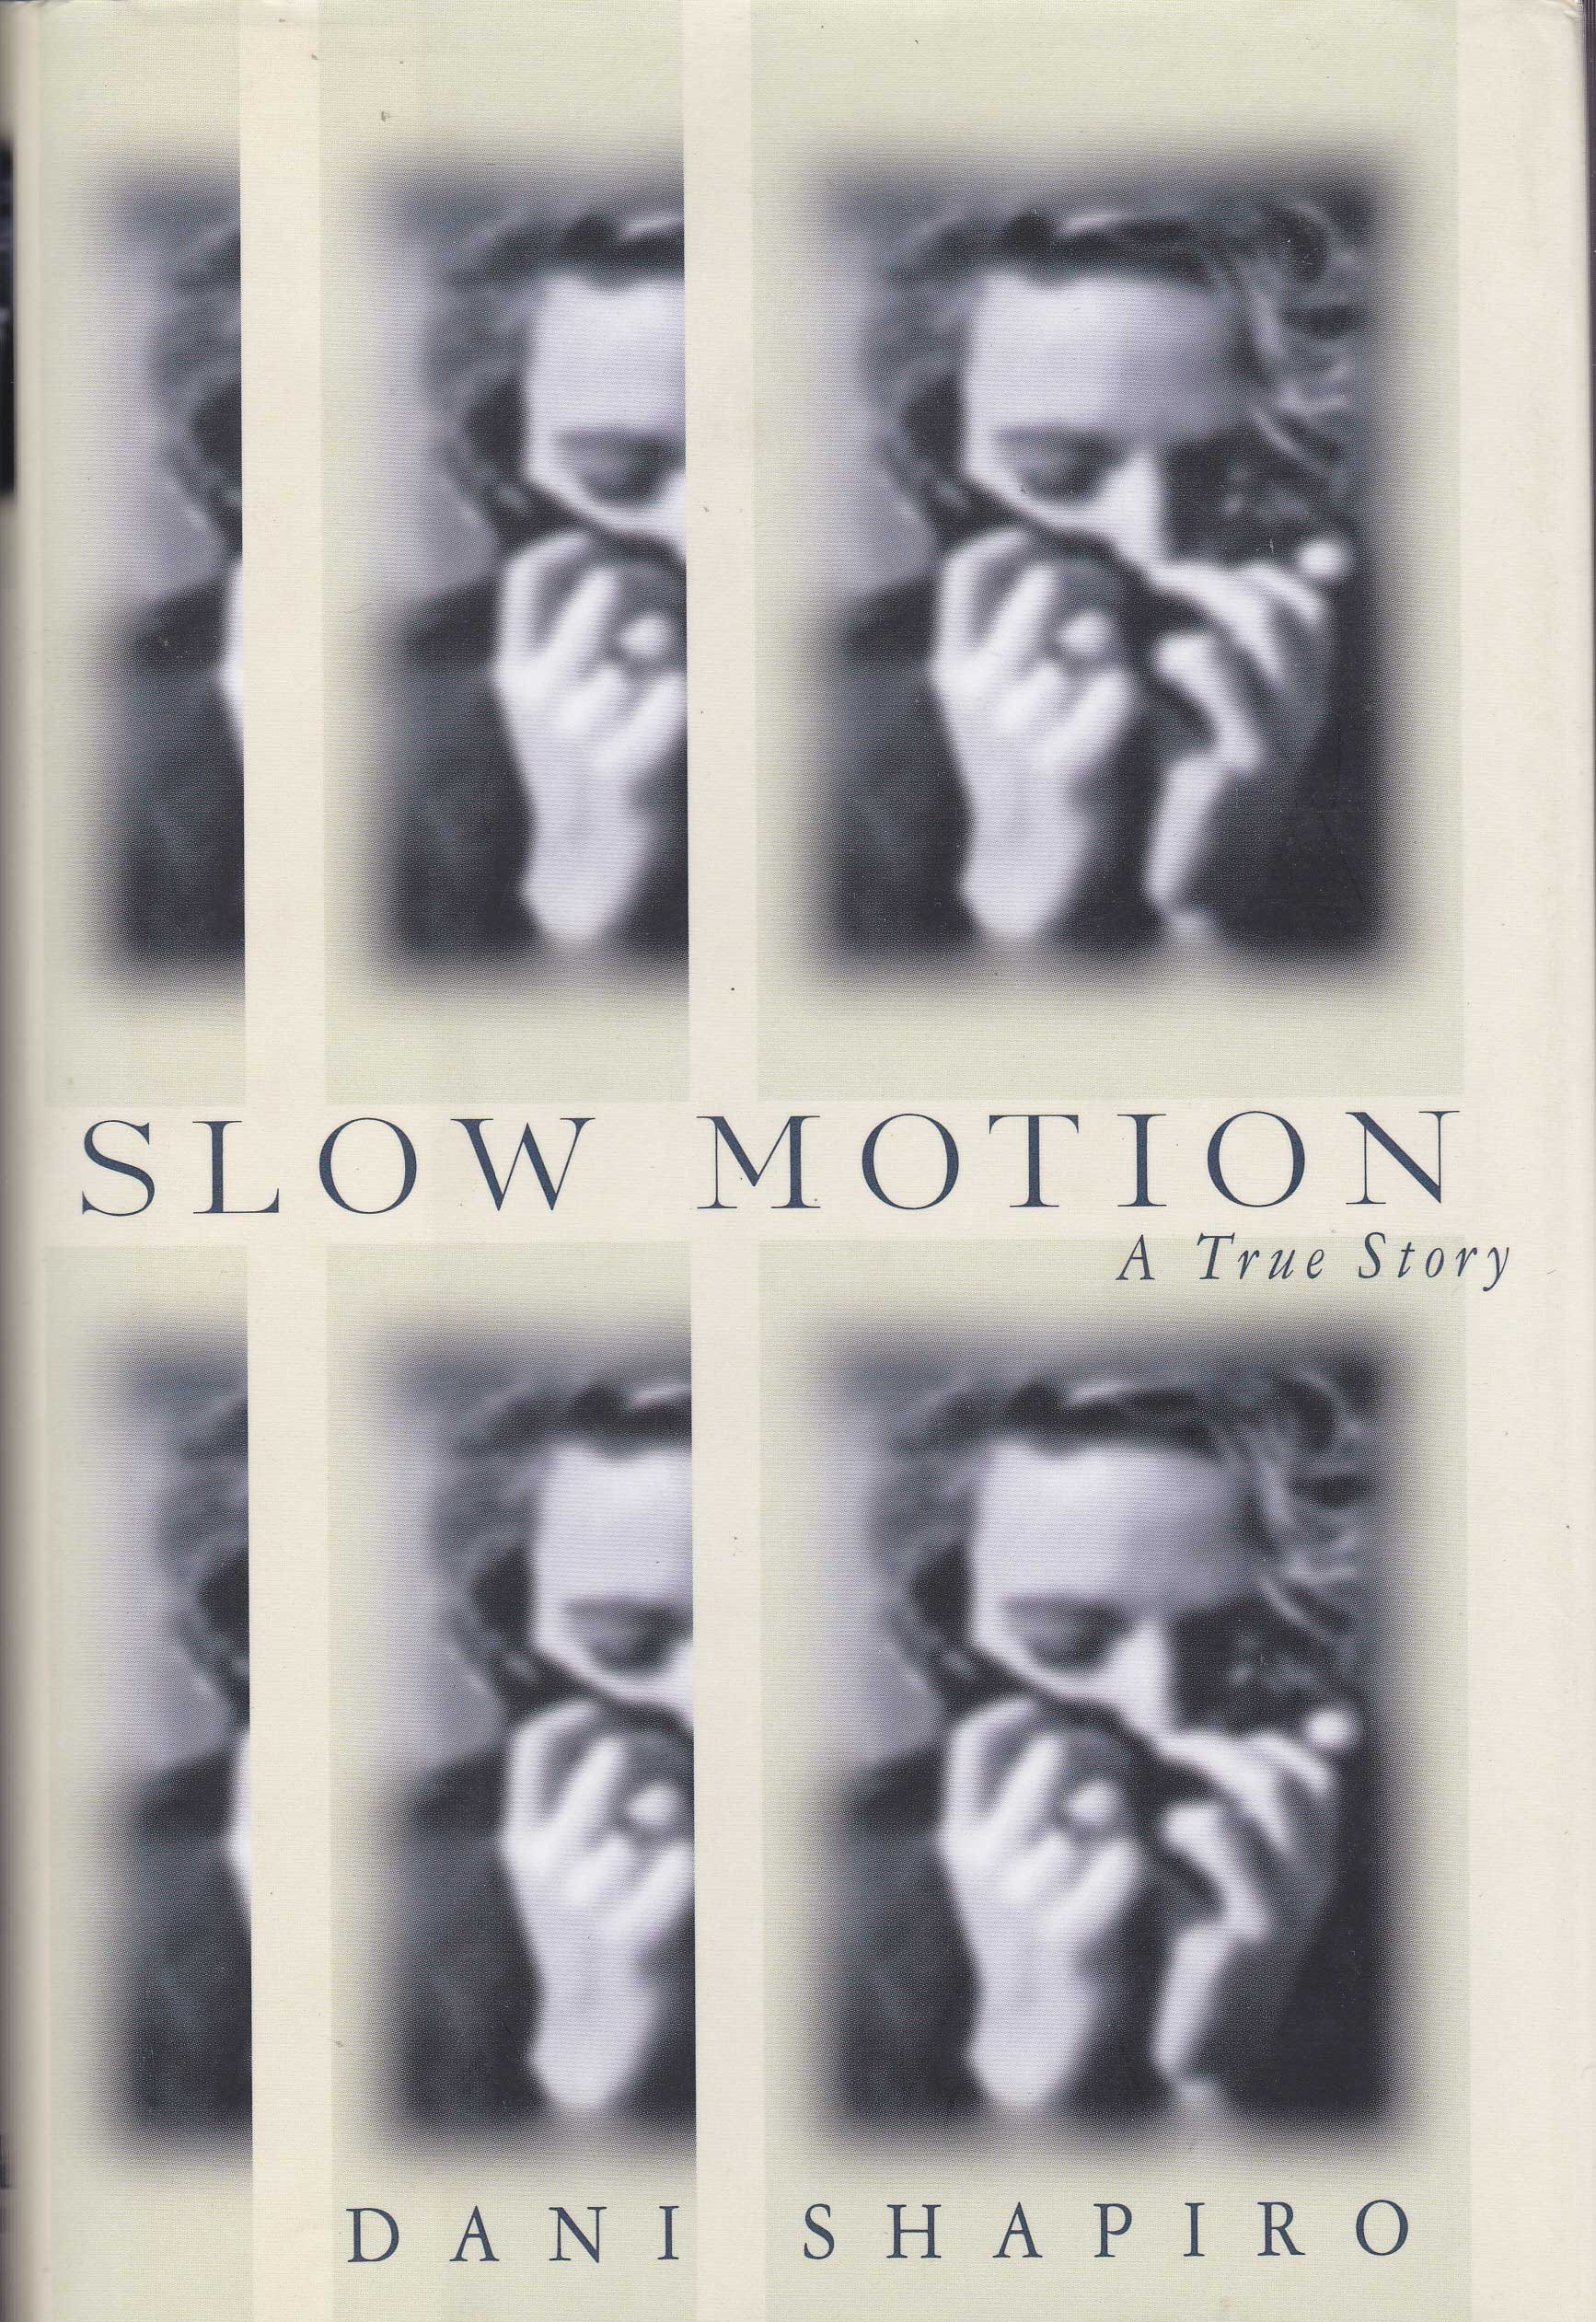 Slow Motion: A True Story book by Dani Shapiro